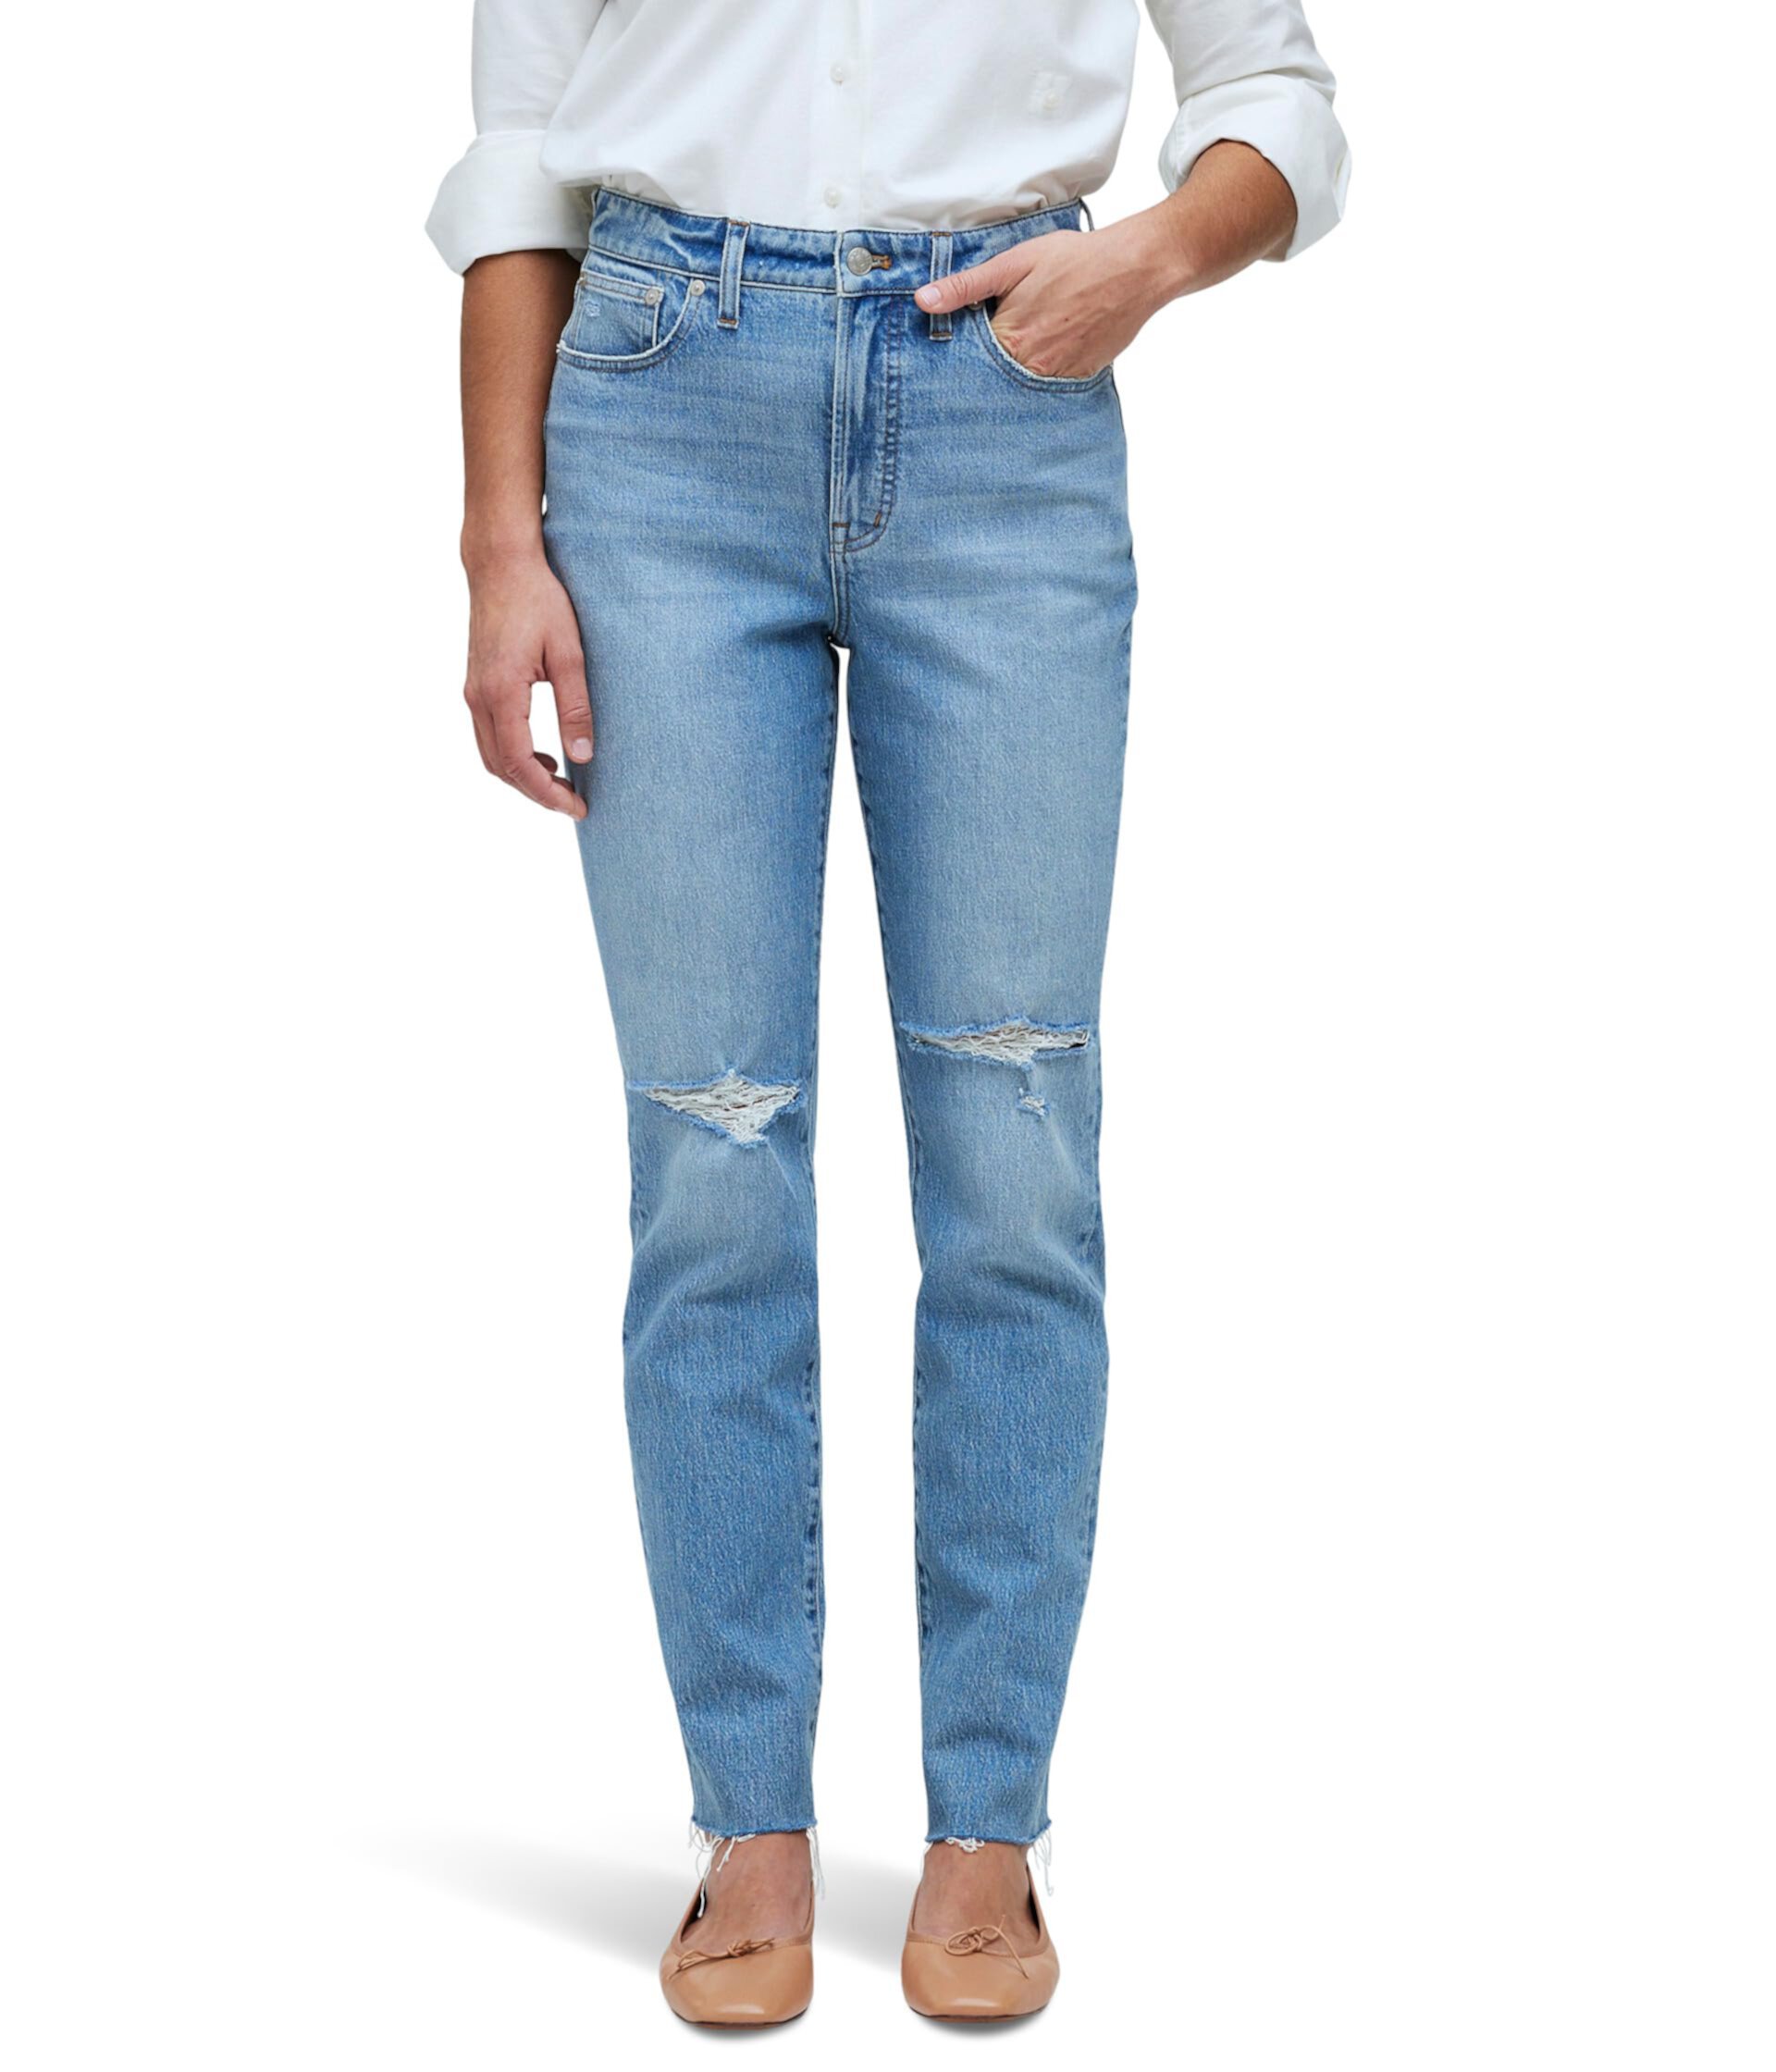 Укороченные джинсы The Perfect Vintage цвета Liland Wash: Raw-Hem Edition Madewell